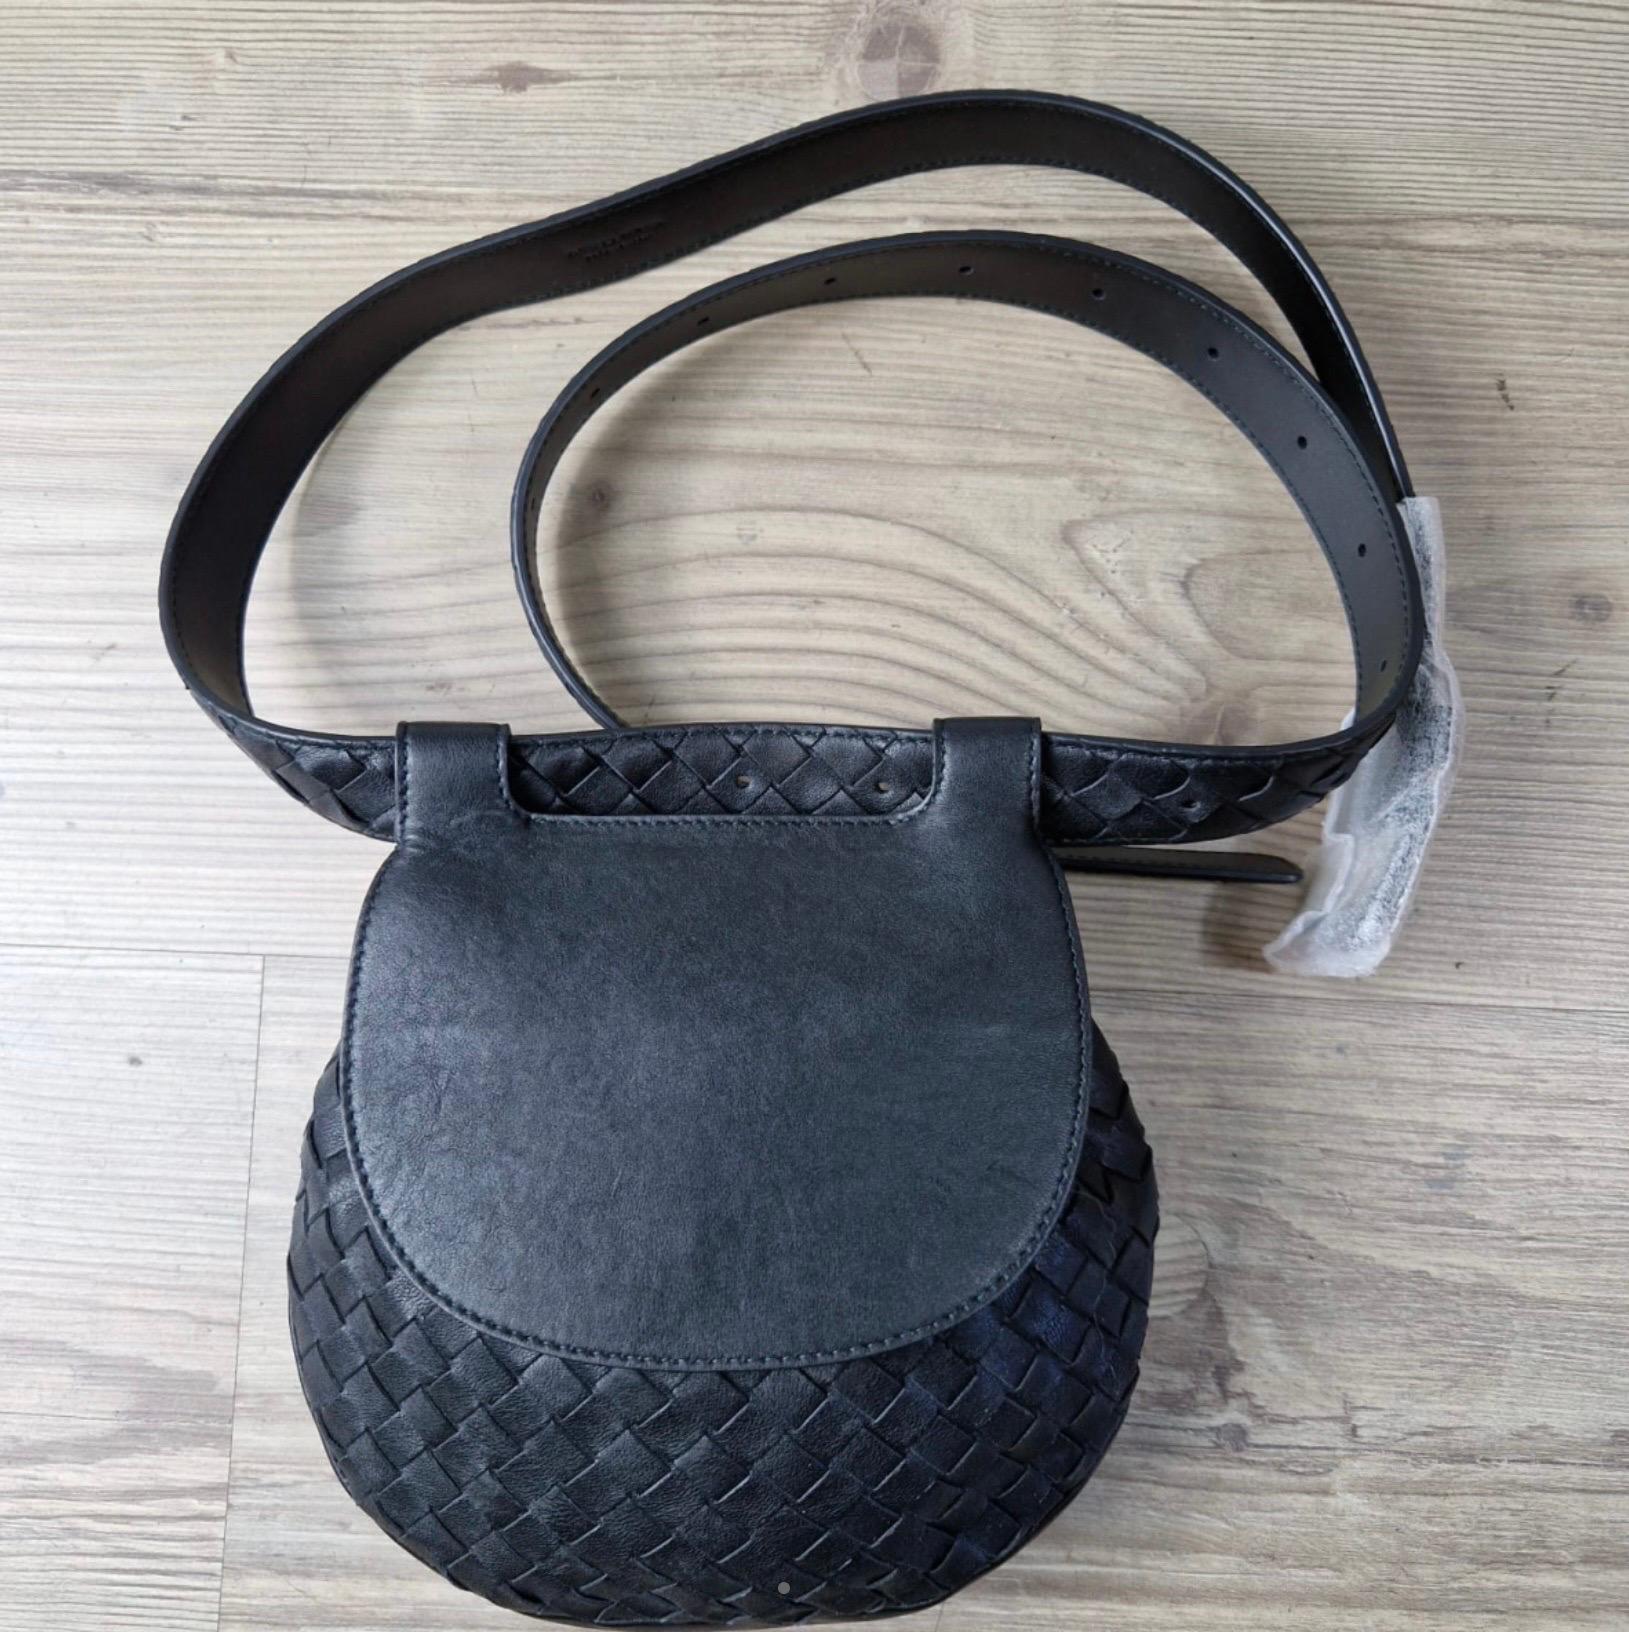 Bottega Veneta Belt Shoulder bag in black leather, with shoulder strap/belt 125cm long, front closure with snap button, length 18cm, height 19cm, 5cm thick.
new, never used with dust bag.